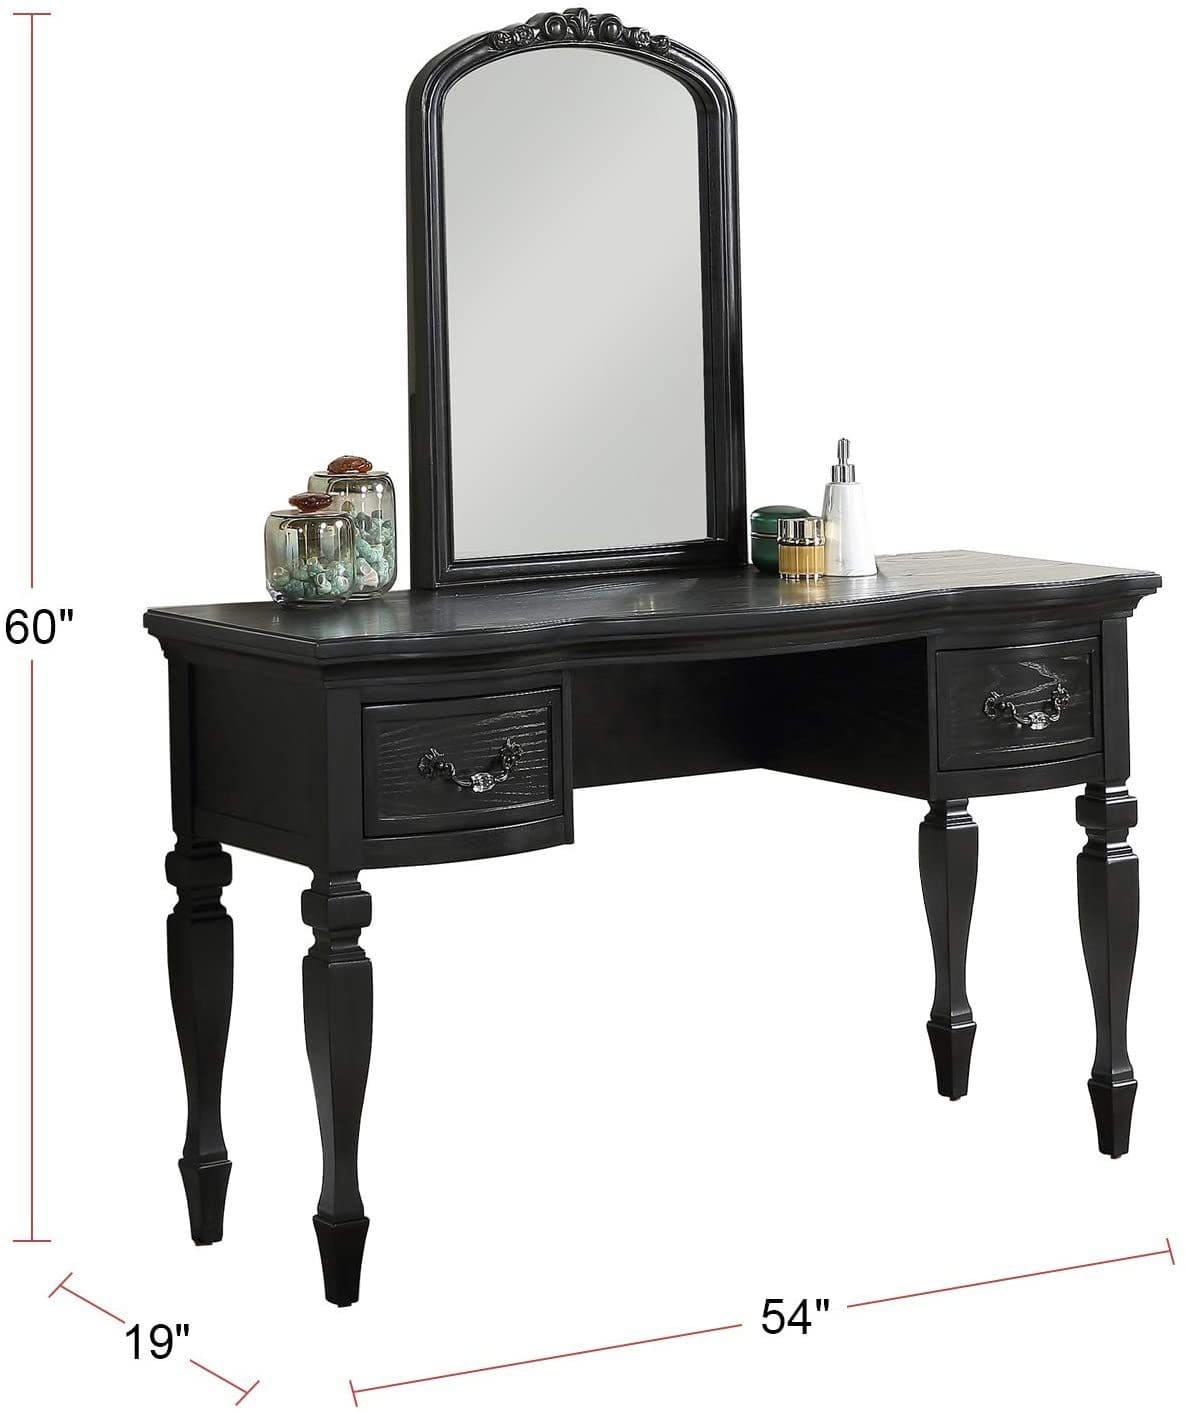 Bedroom Classic Vanity Set Wooden Carved Mirror Stool Drawers Black Color